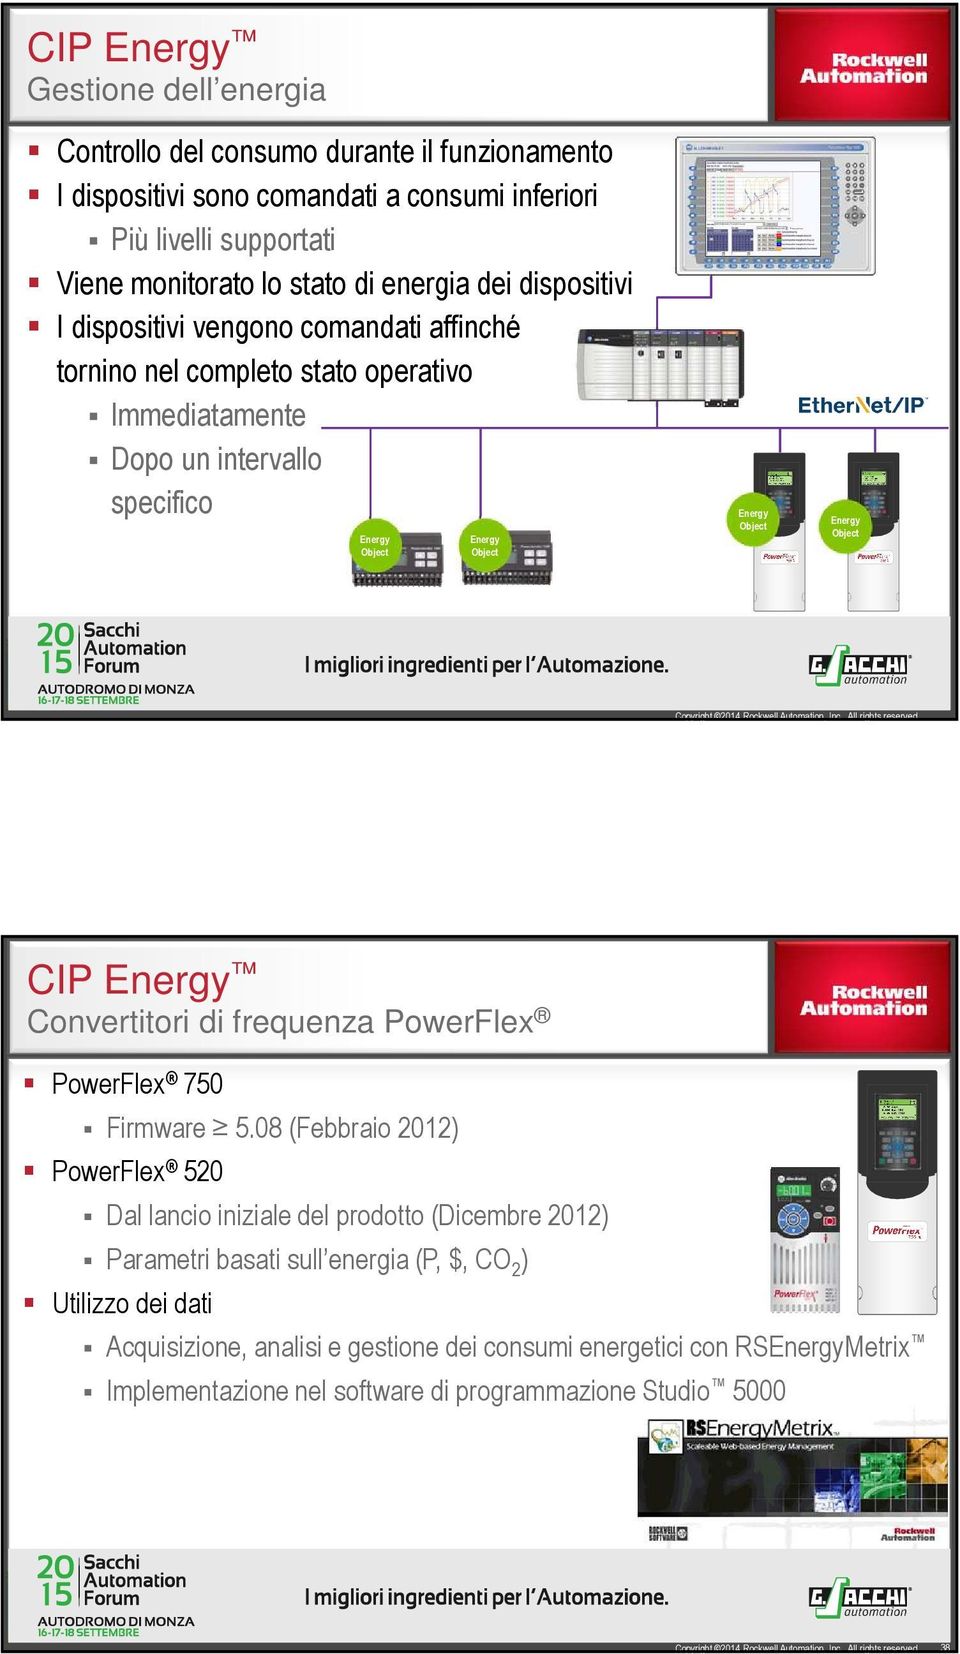 Object Energy Object 37 CIP Energy Convertitori di frequenza PowerFlex PowerFlex 750 Firmware 5.